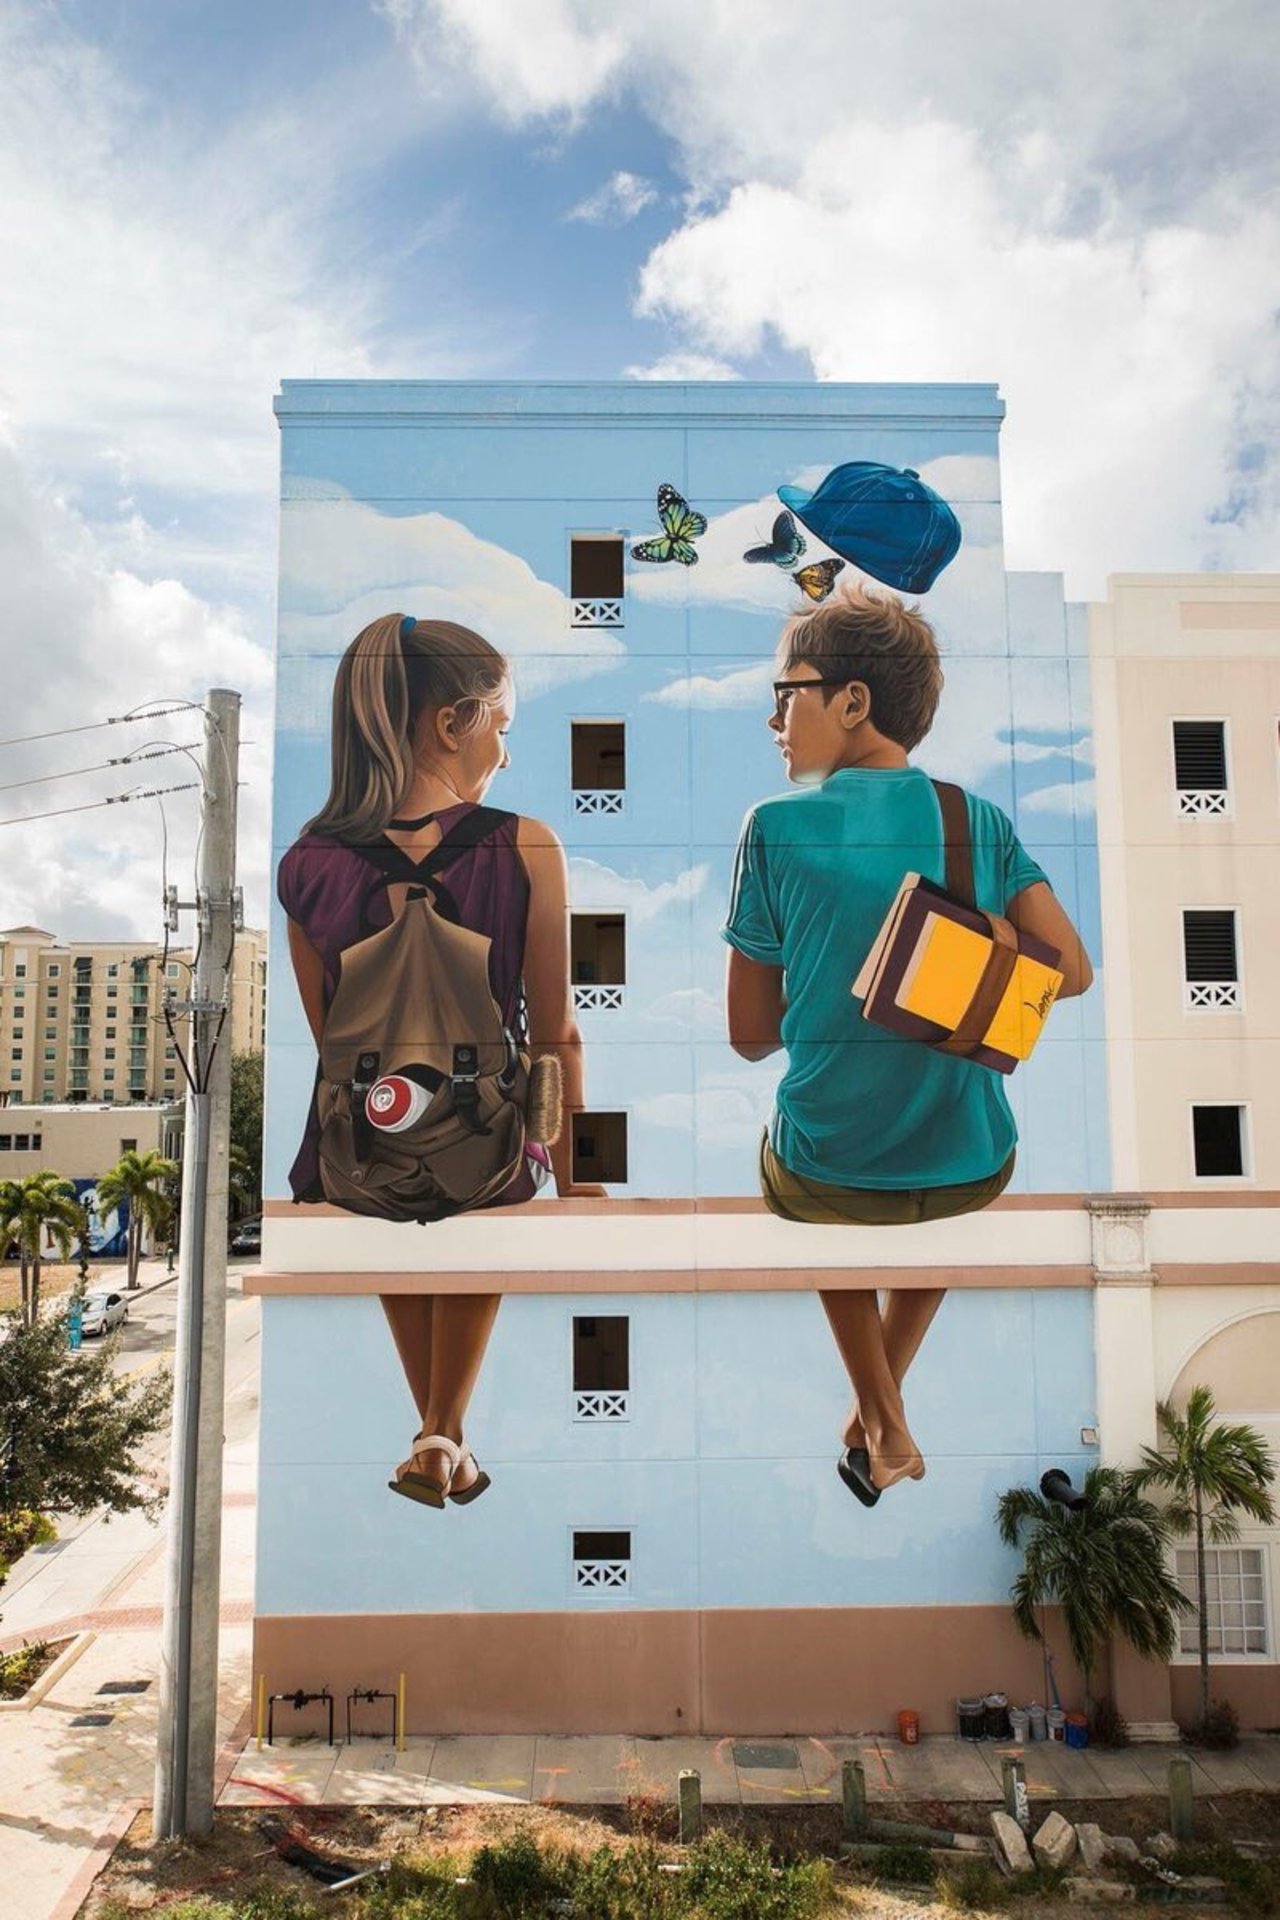 #mural by Lonac #Florida #USA#art #graffiti #streetart https://t.co/BP8MKjydOL